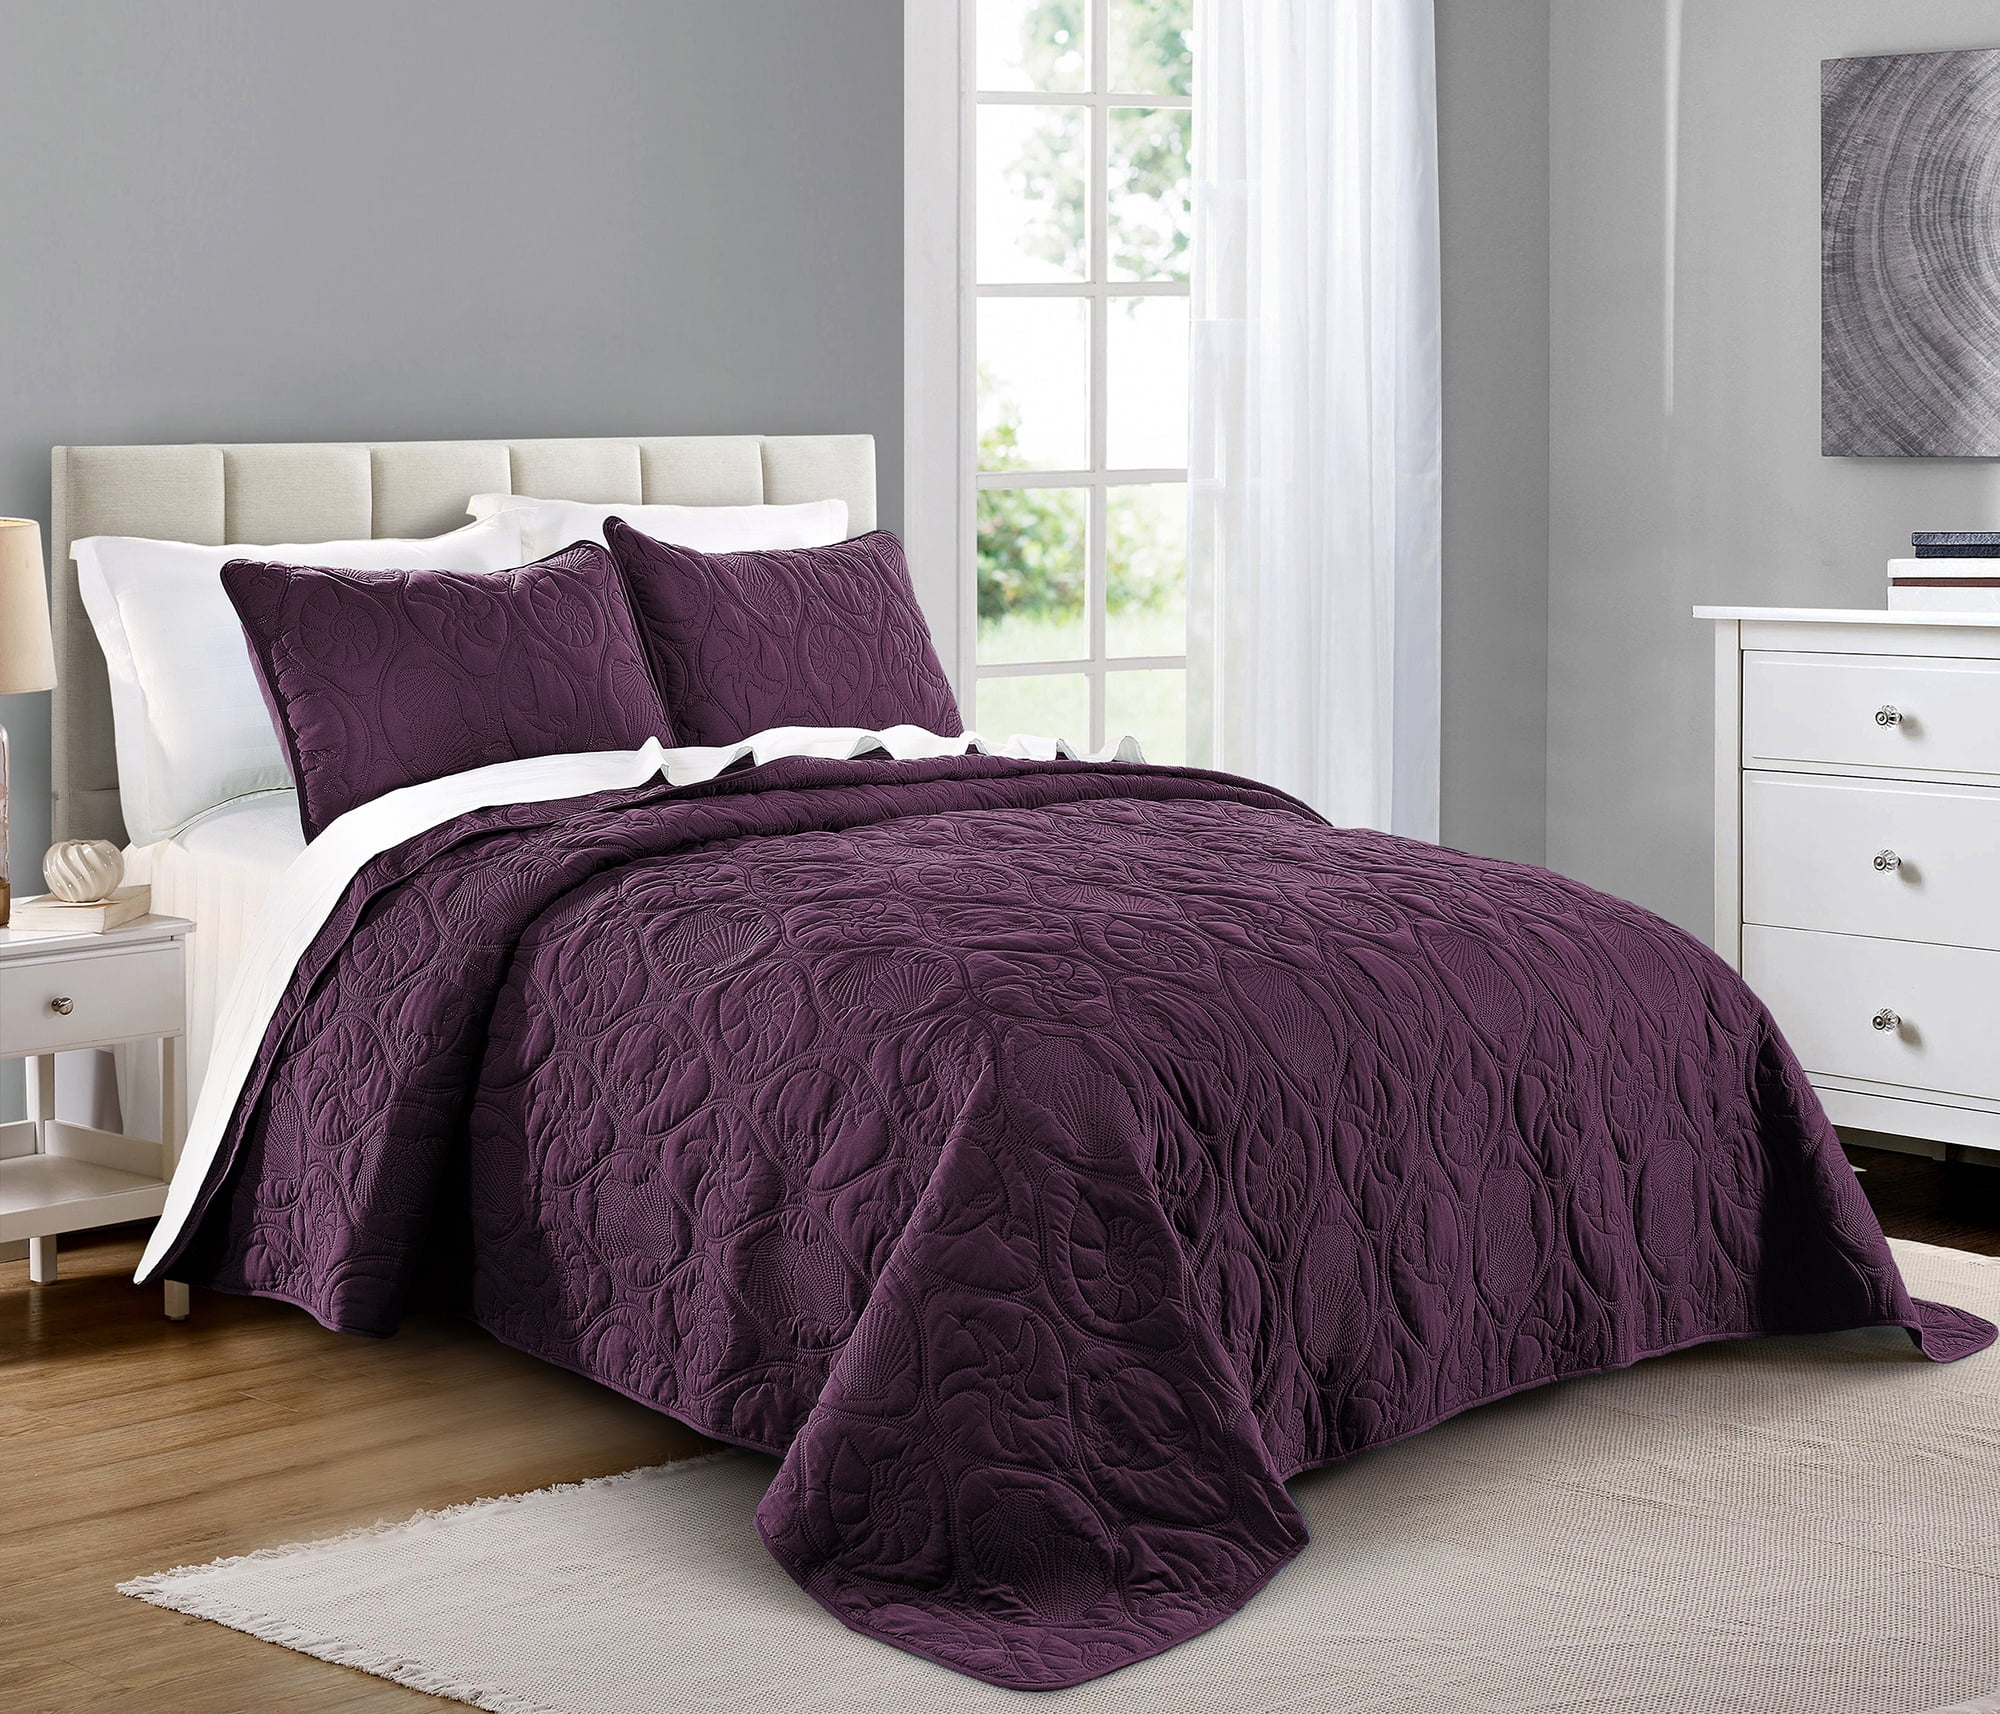 Quilt Set King/Cal King/California King Size Purple - Oversized ...